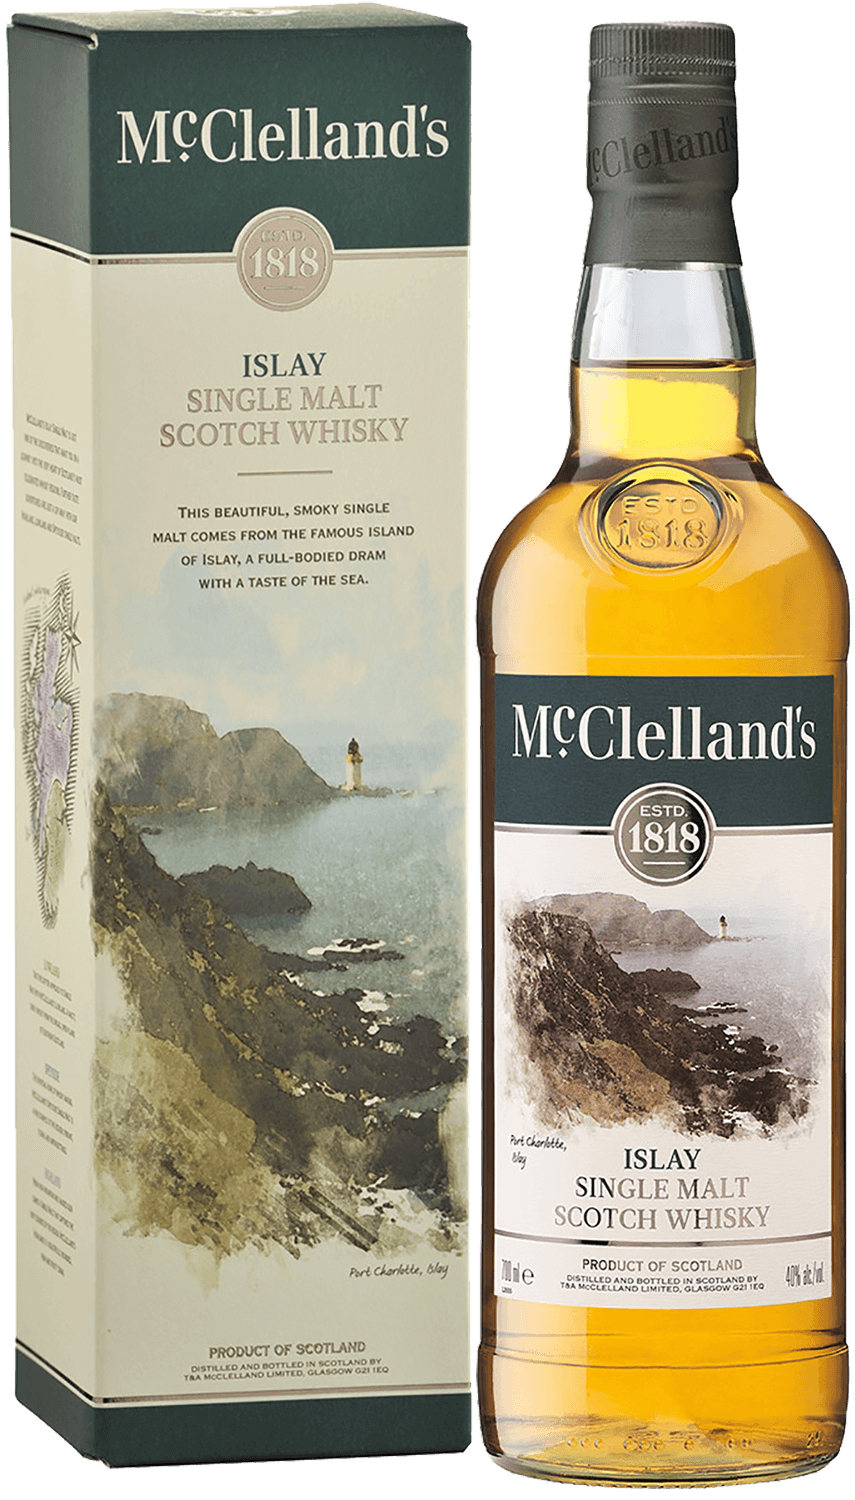 McClelland's Islay single malt scotch whisky (gift box) bowmore 15 y o islay single malt scotch whisky gift box